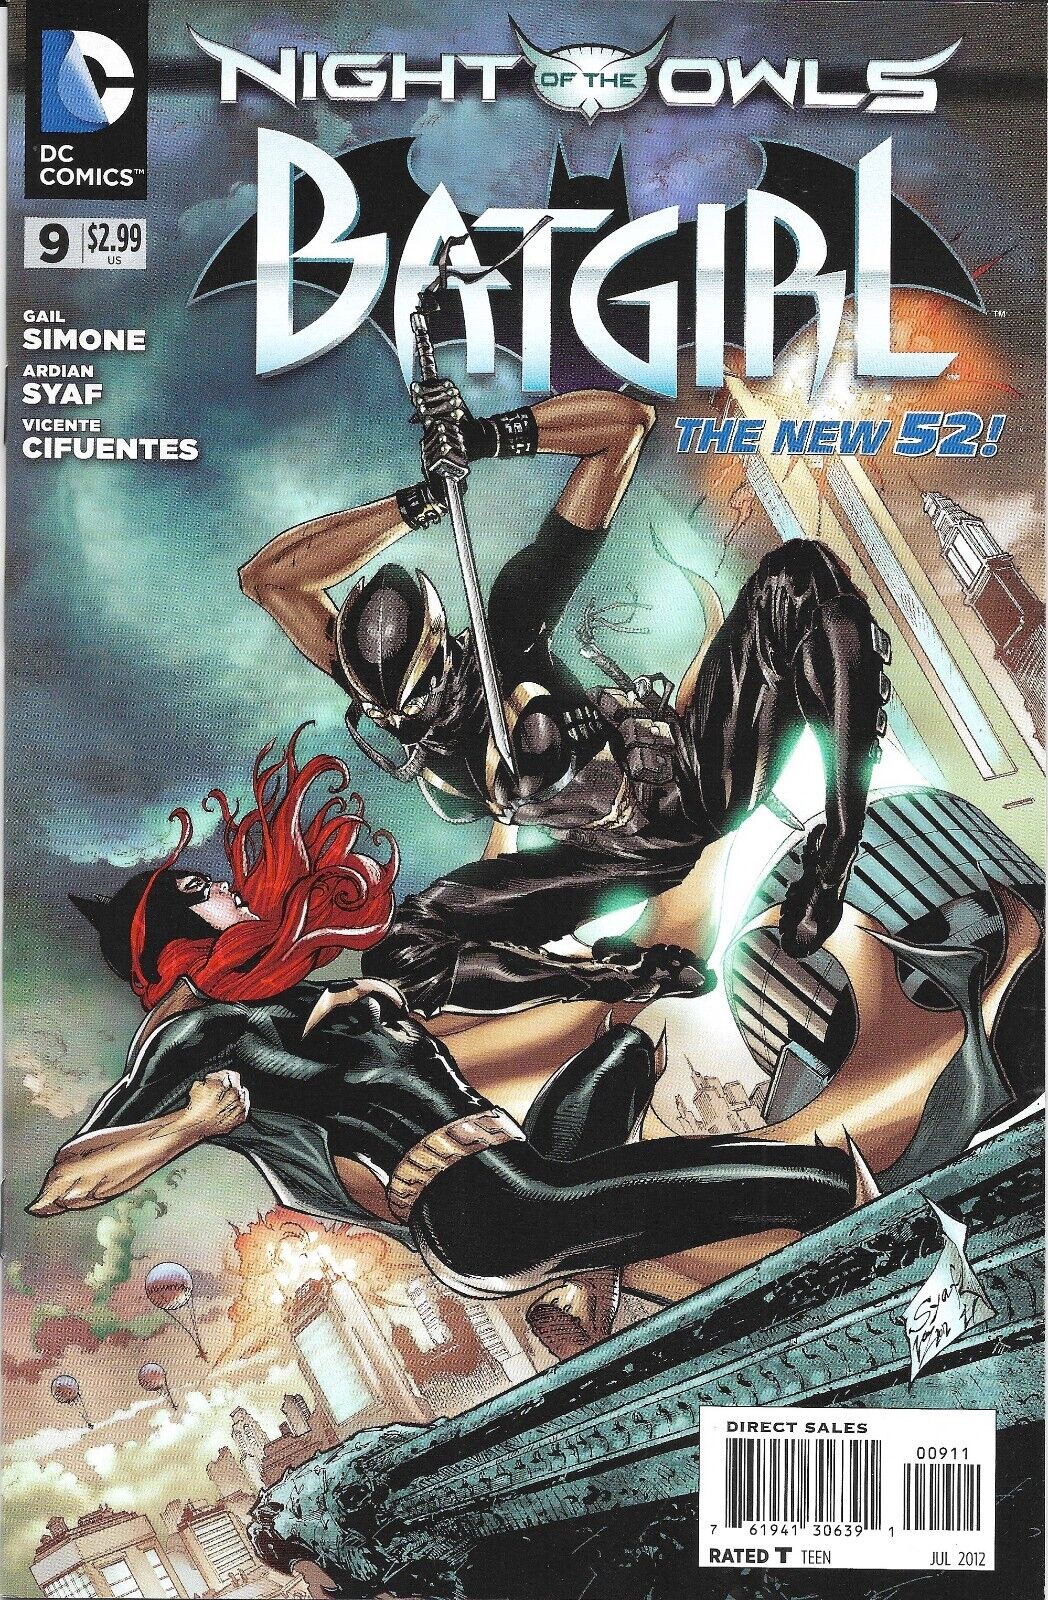 Batgirl - 9-10-11-12 (4 Comics) - Free hipping